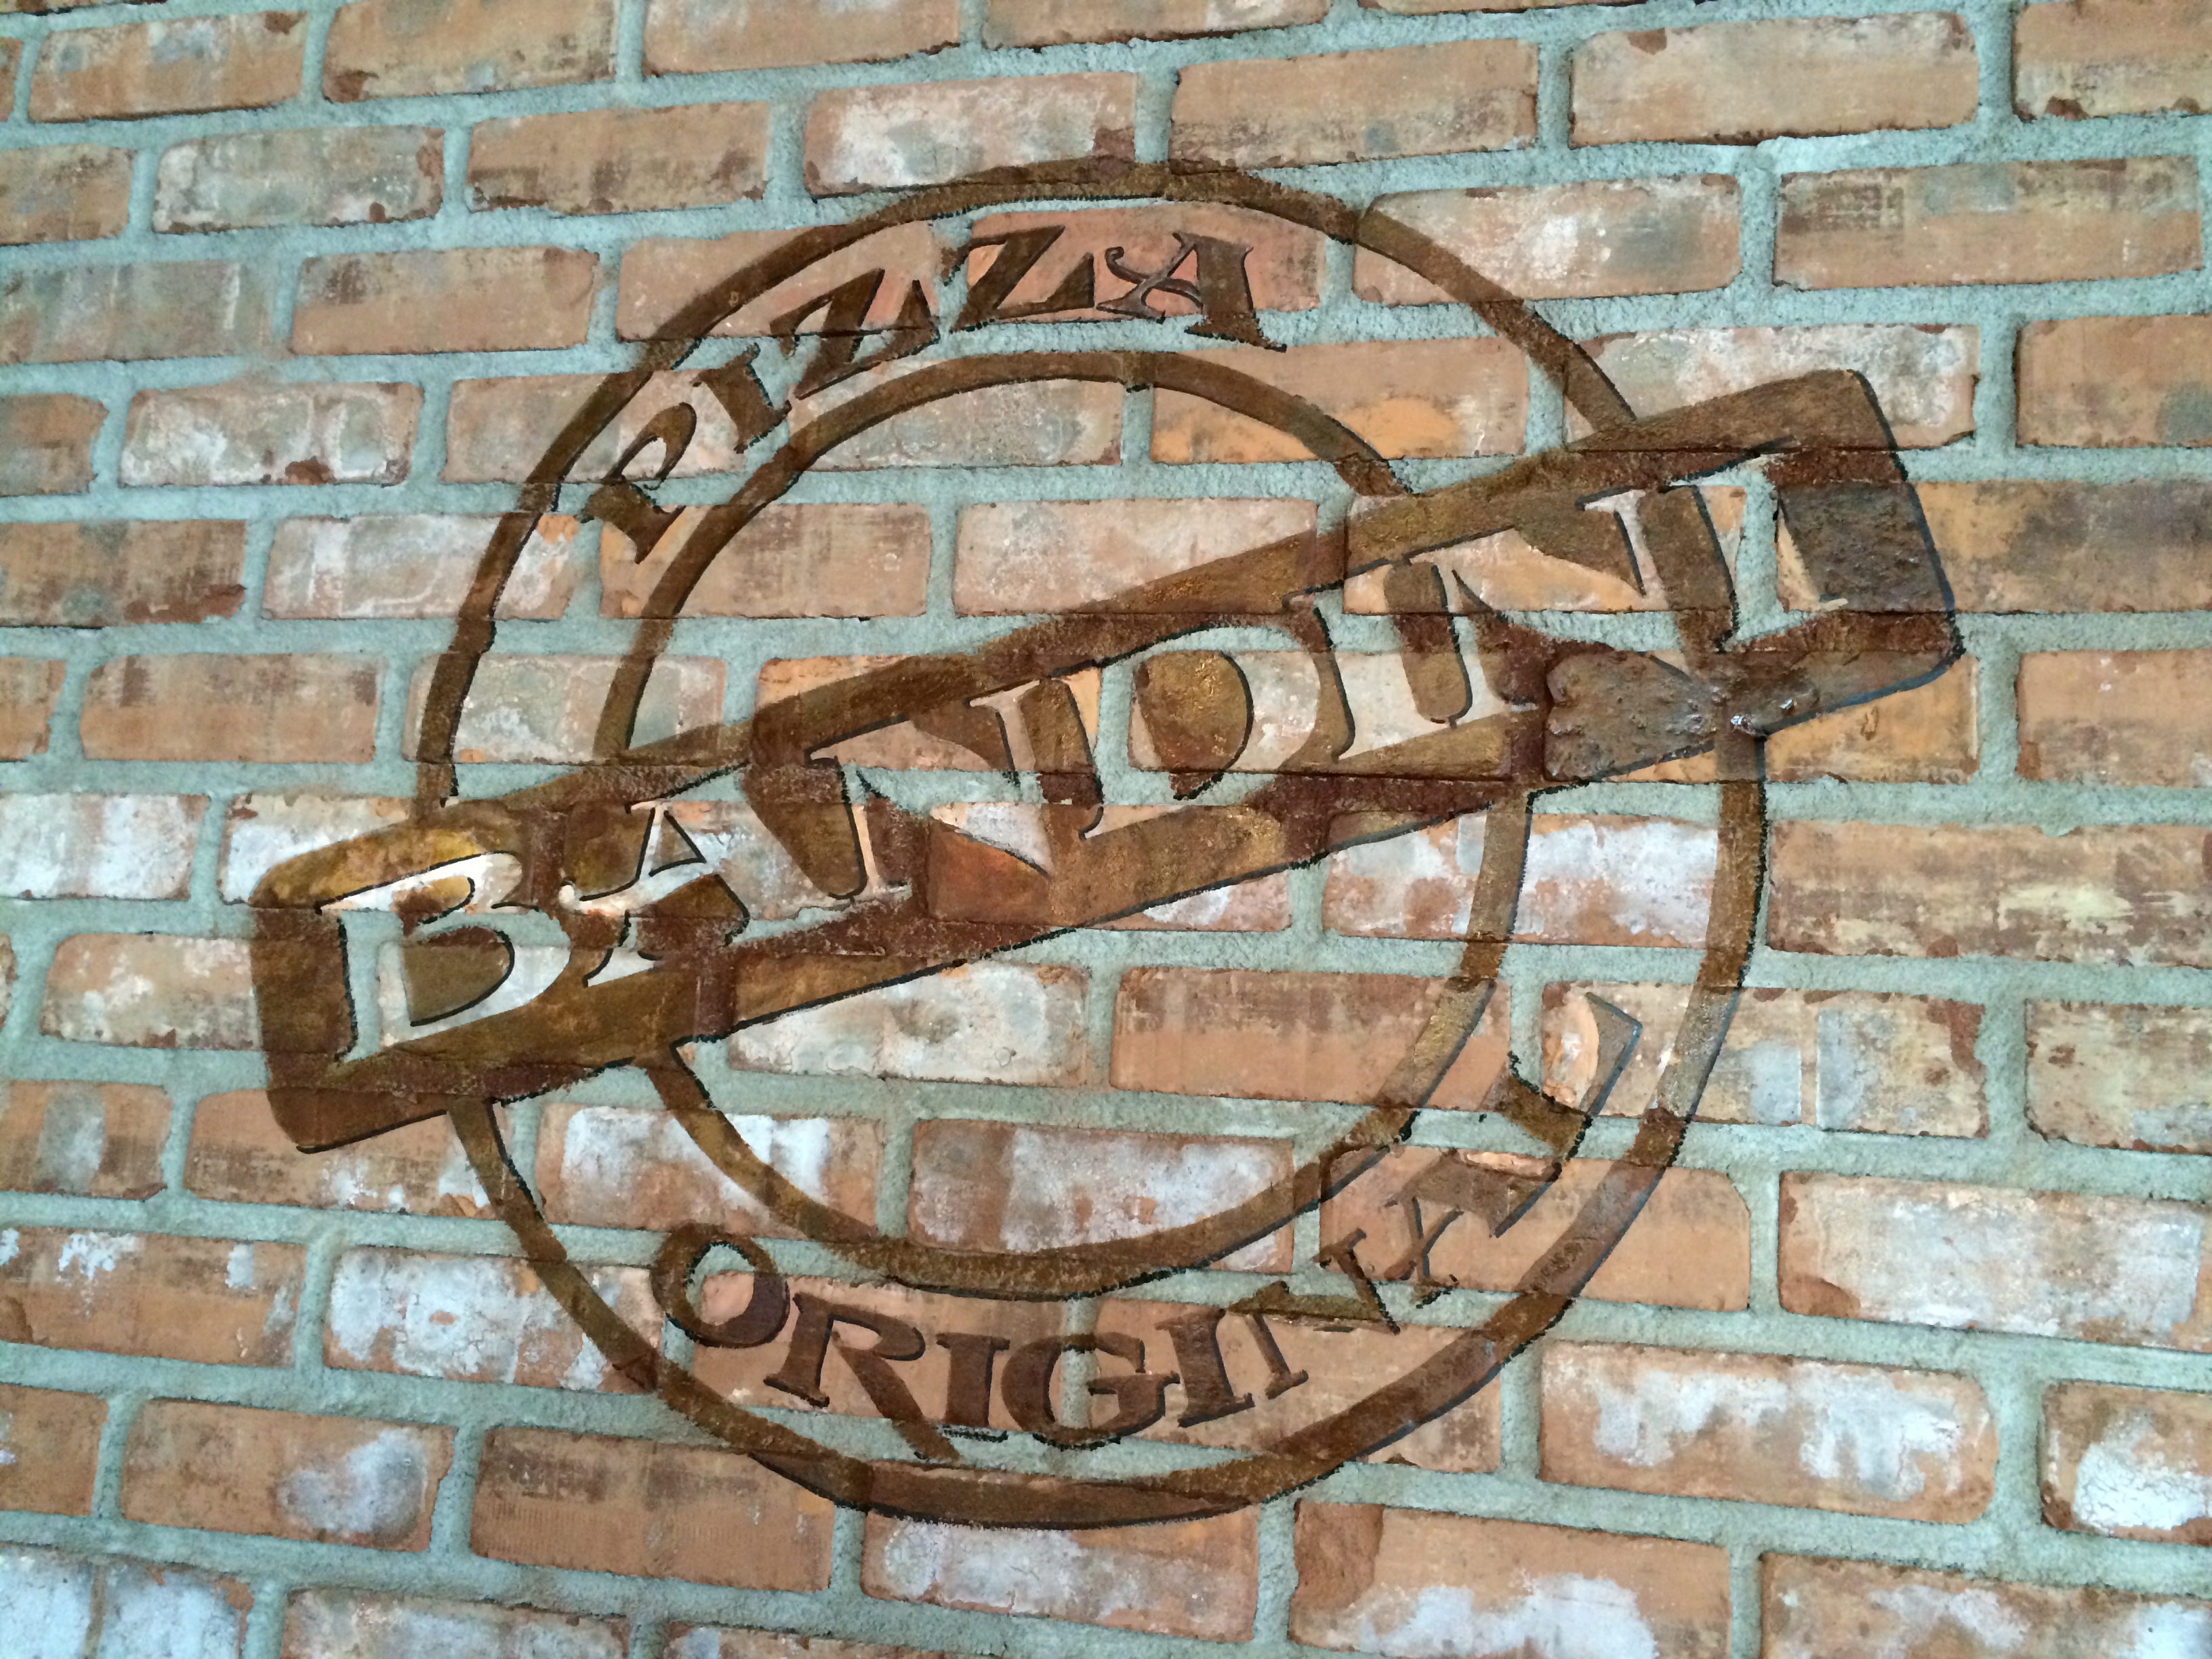 Bandini Pizza - Brush lettering on brick